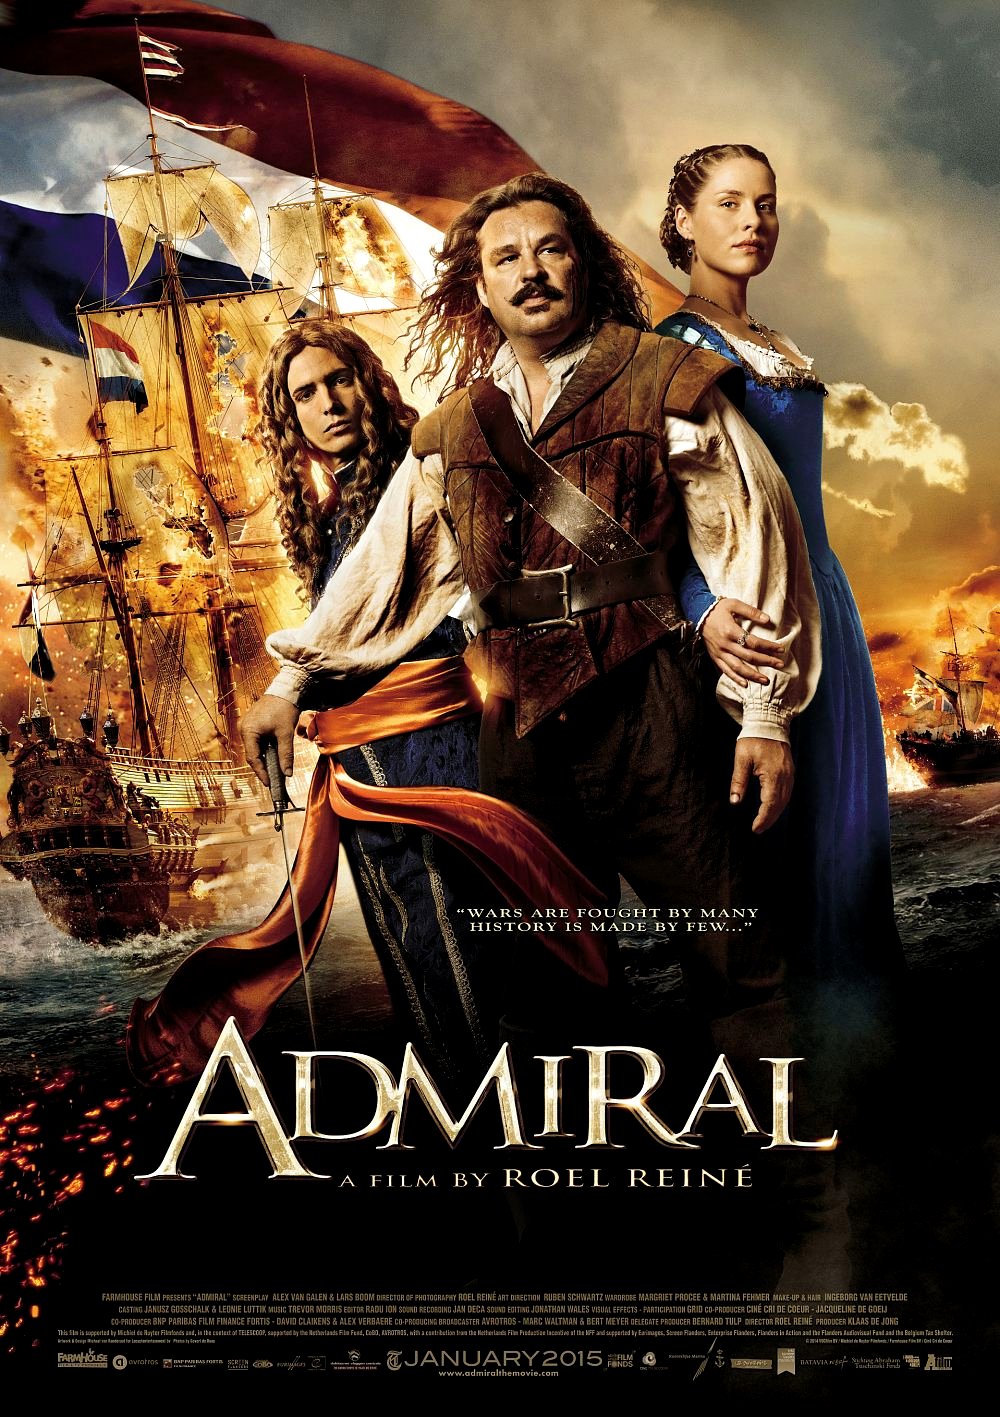 Admiral (2015) Movie Poster Google image from https://arteis.files.wordpress.com/2015/01/ruyter-b.jpg